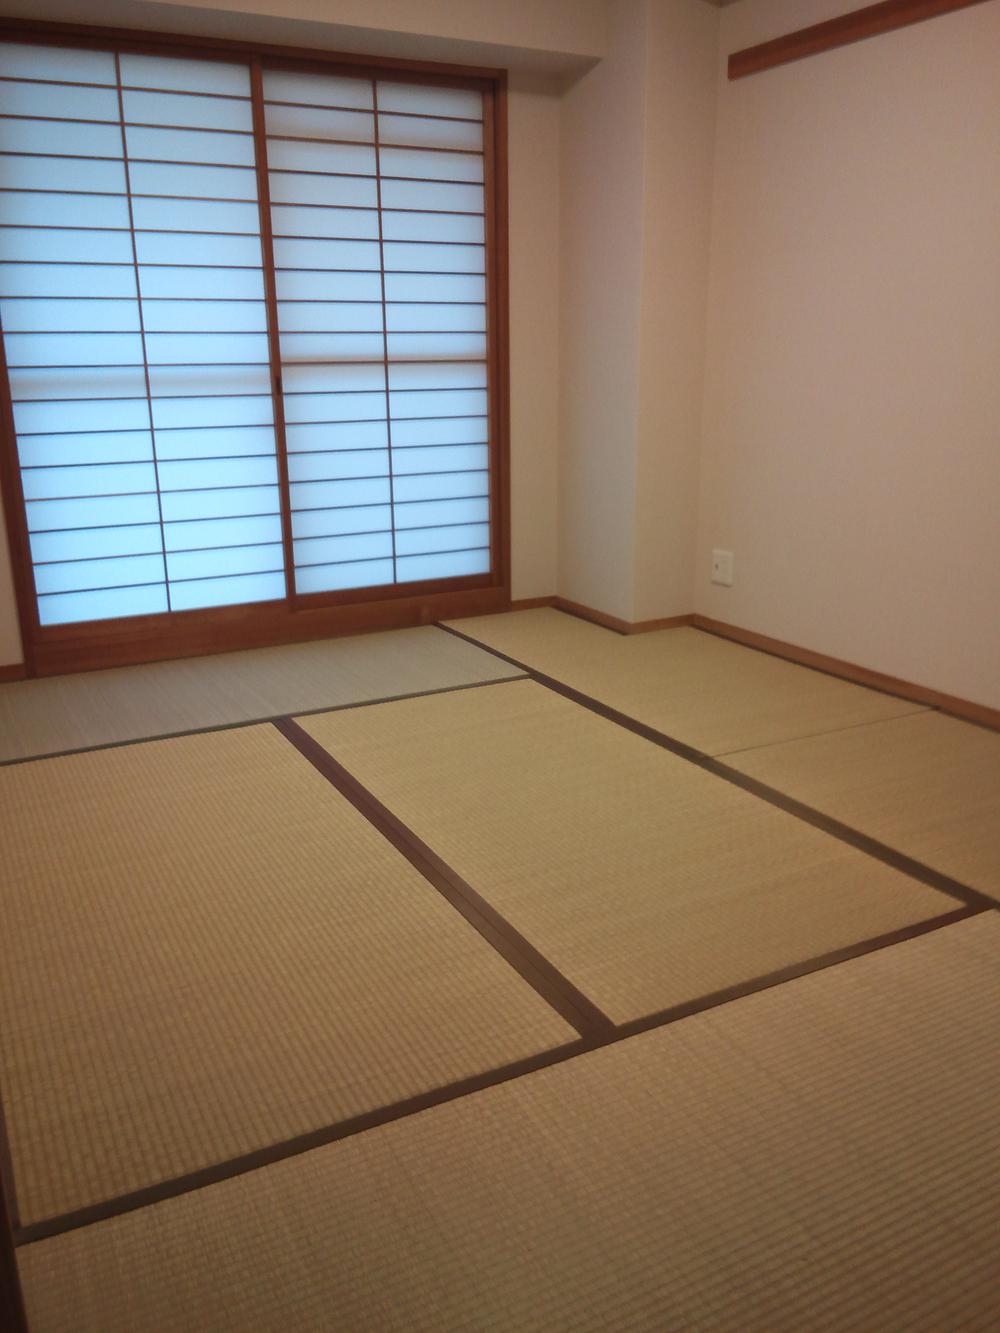 Non-living room. It tatami mat replacement